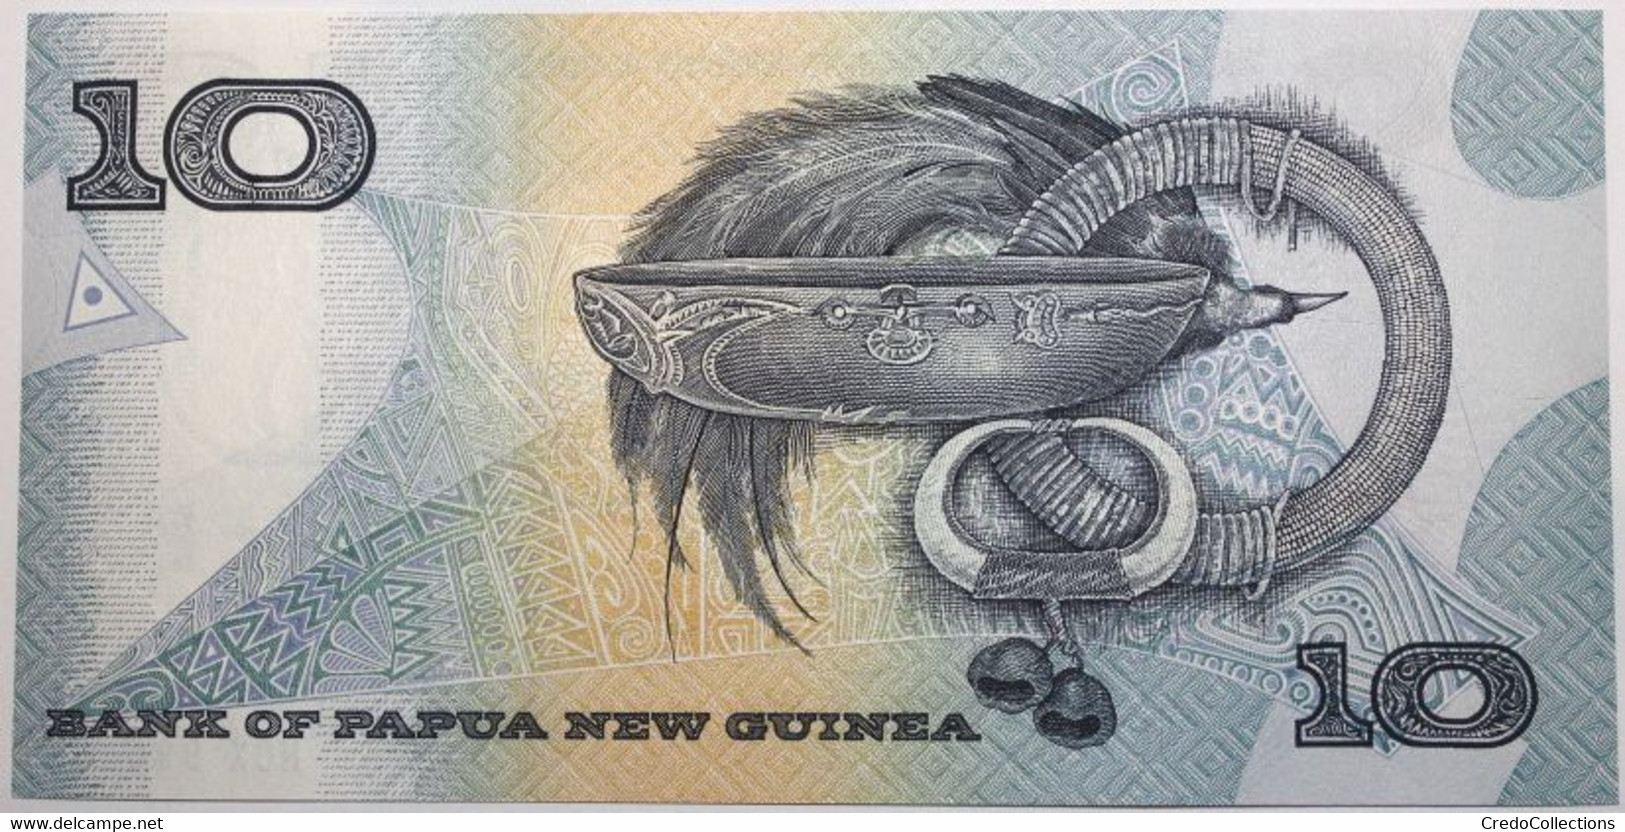 Papouasie-Nouvelle Guinée - 10 Kina - 1995 - PICK 9c - NEUF - Papua Nuova Guinea